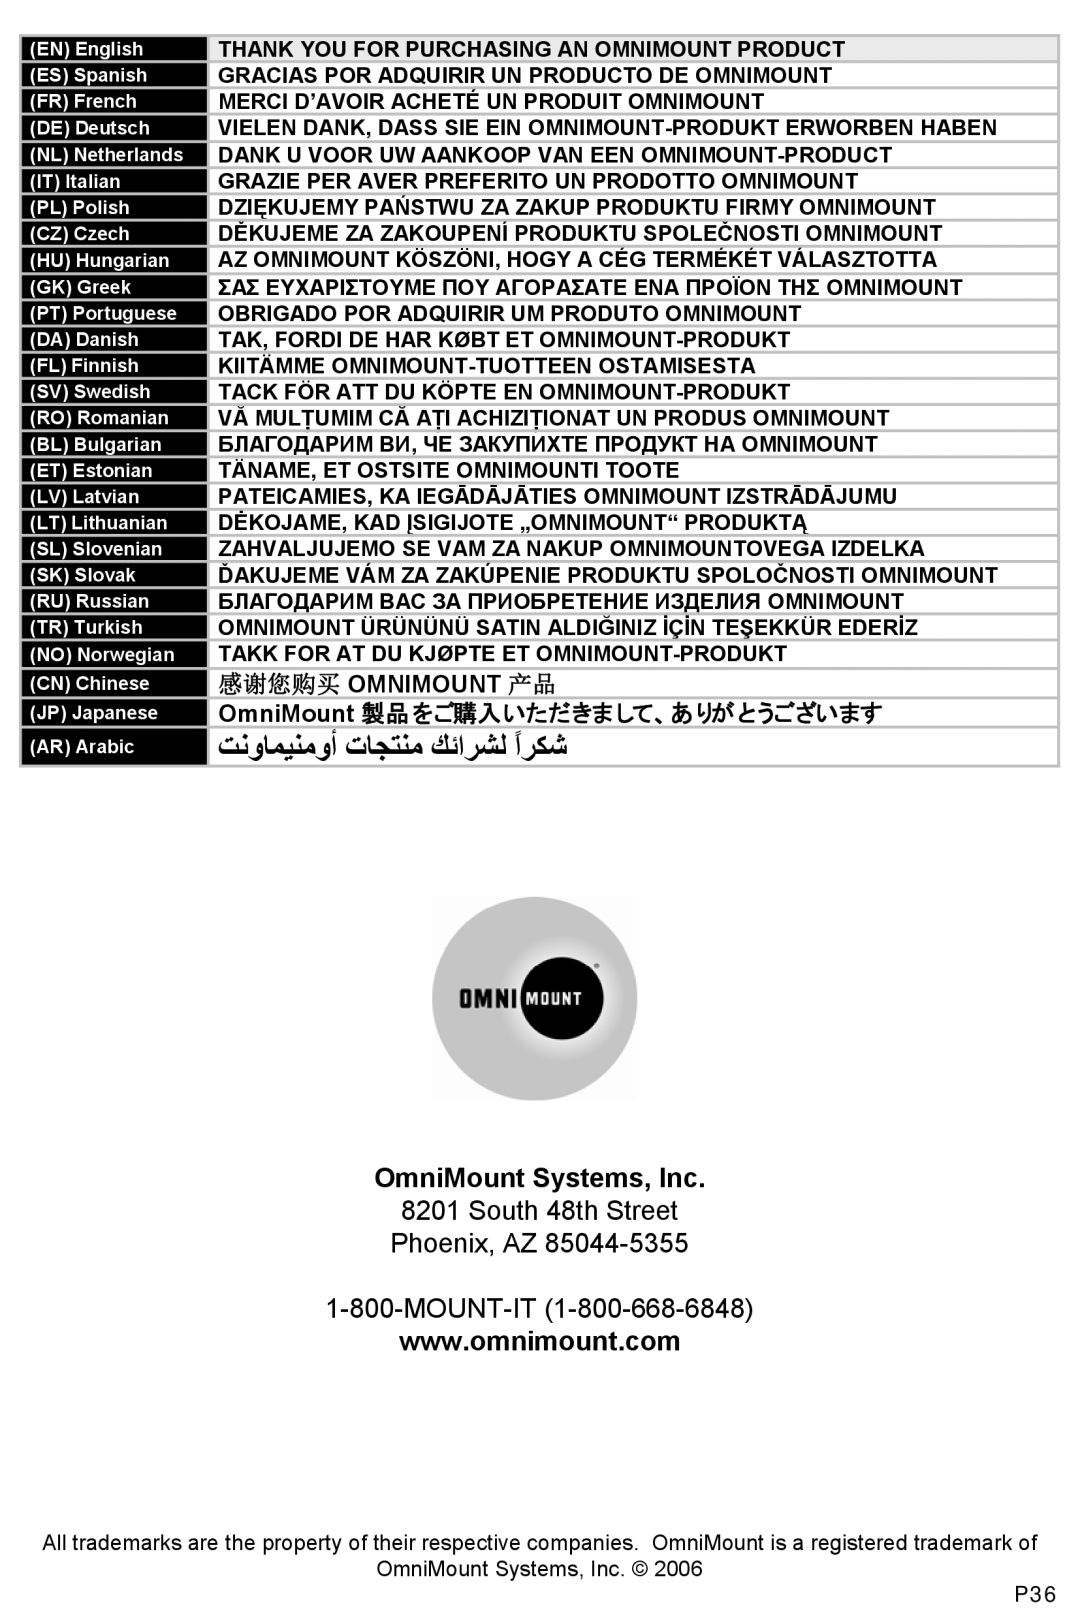 Omnimount UL10021ULN OmniMount Systems, Inc, ﺖﻧوﺎﻤﻴﻨﻣوأ تﺎﺠﺘﻨﻣ ﻚﺋاﺮﺸﻟ اﺮﻜﺷً, South 48th Street Phoenix, AZ 1-800-MOUNT-IT 